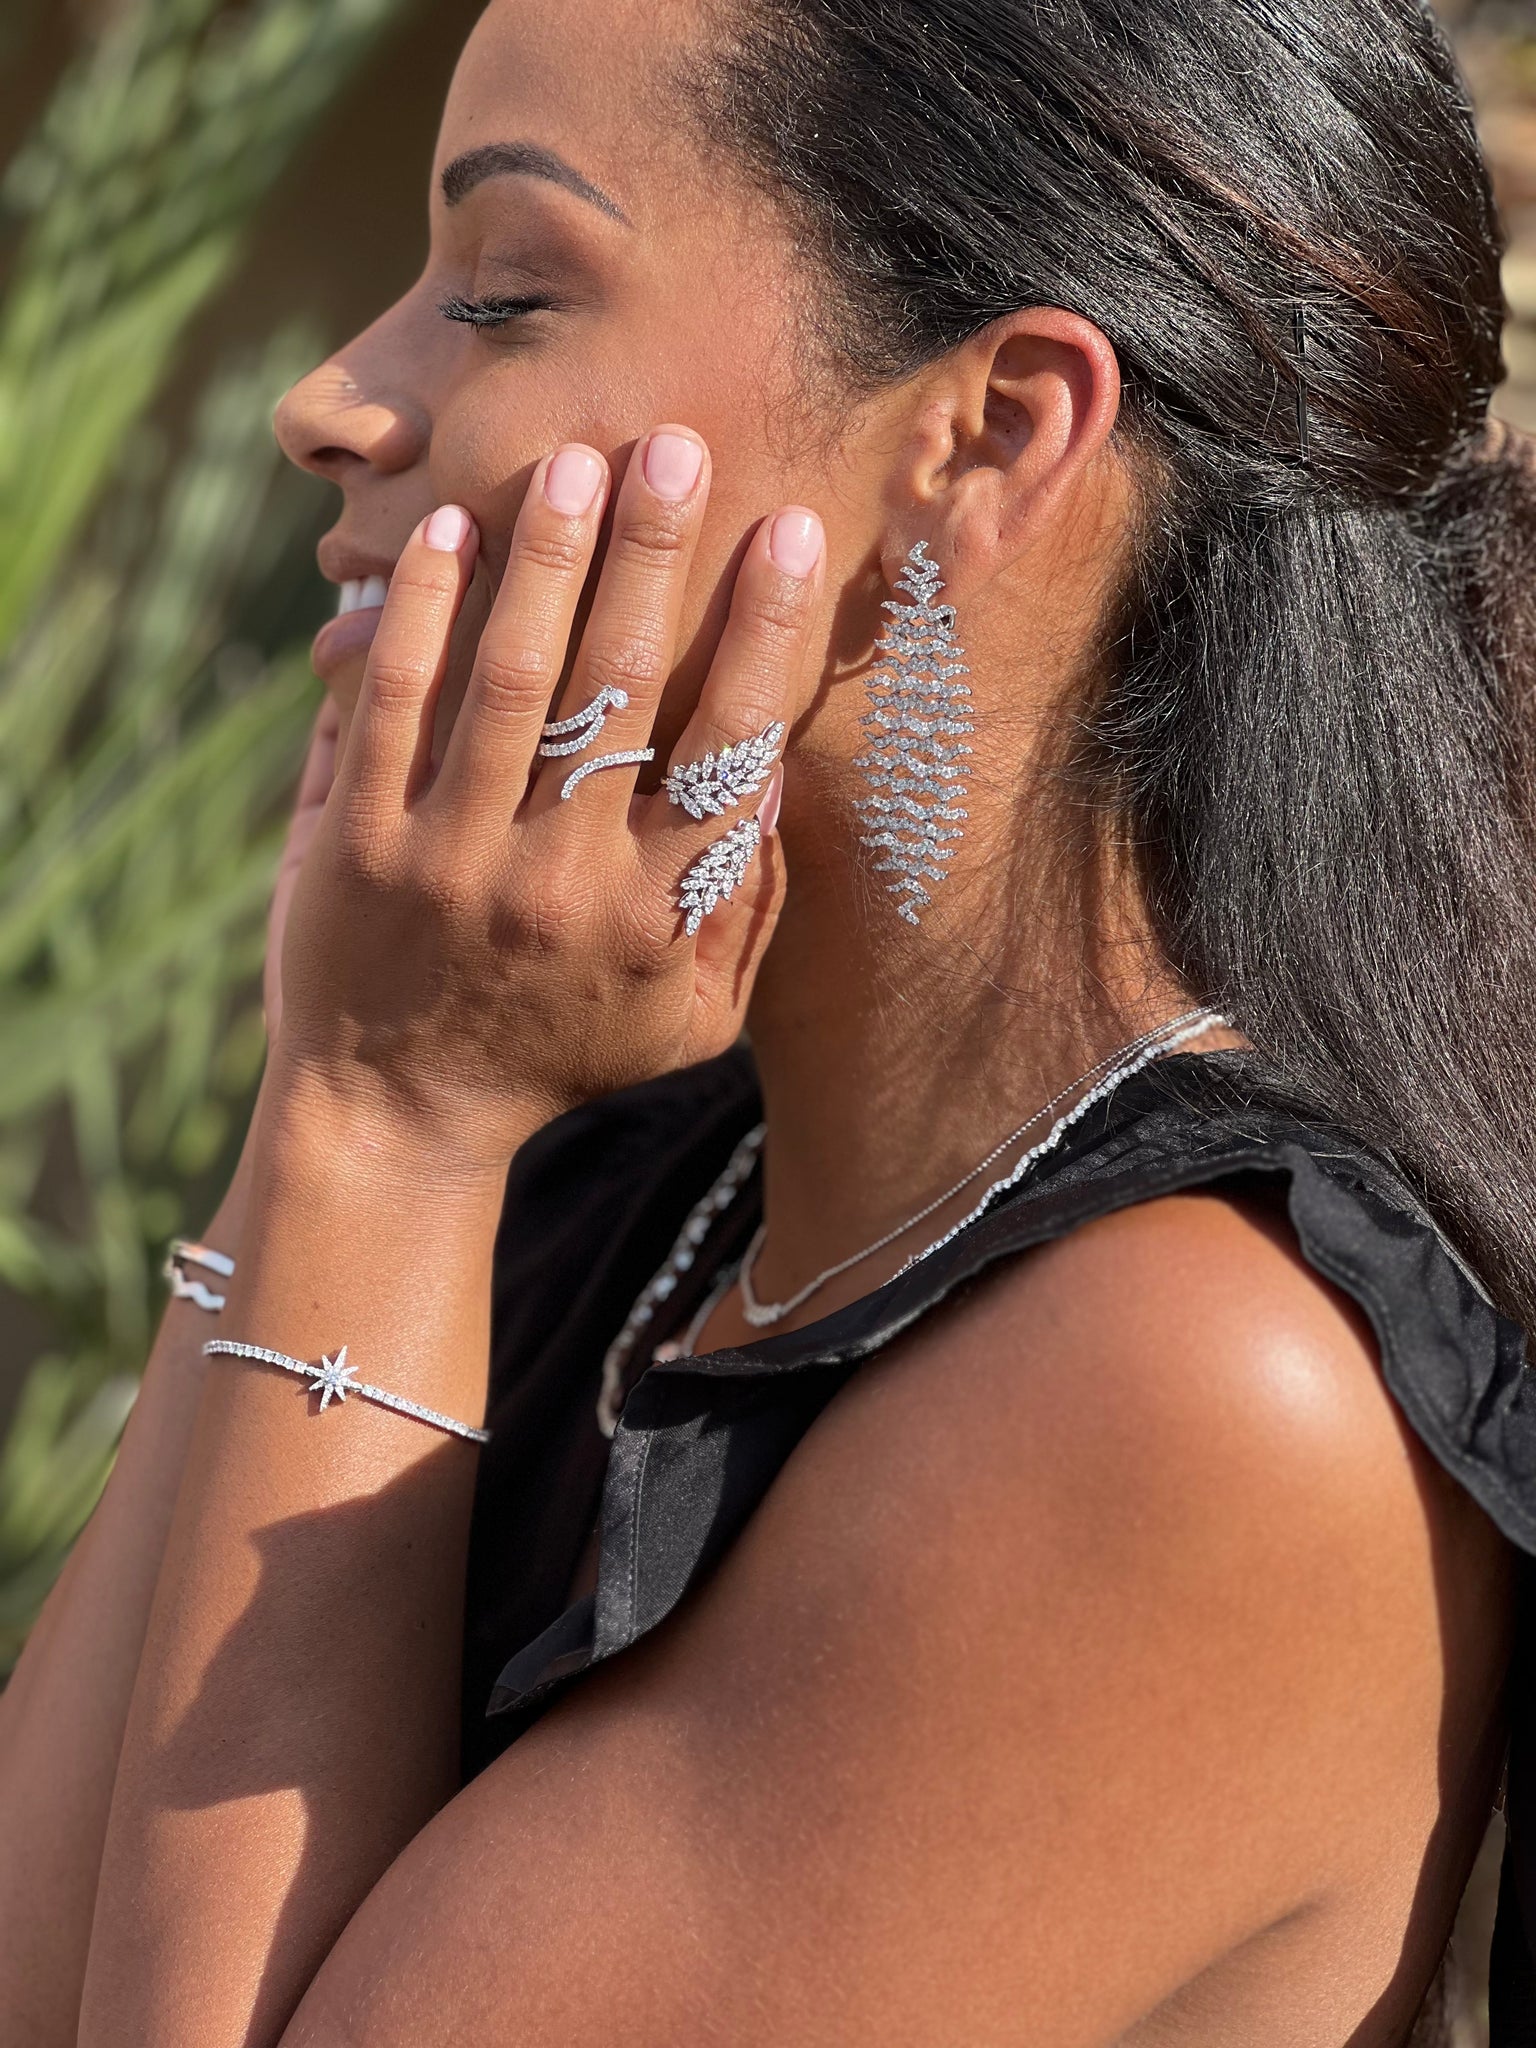 Large Diamond Rio Earrings